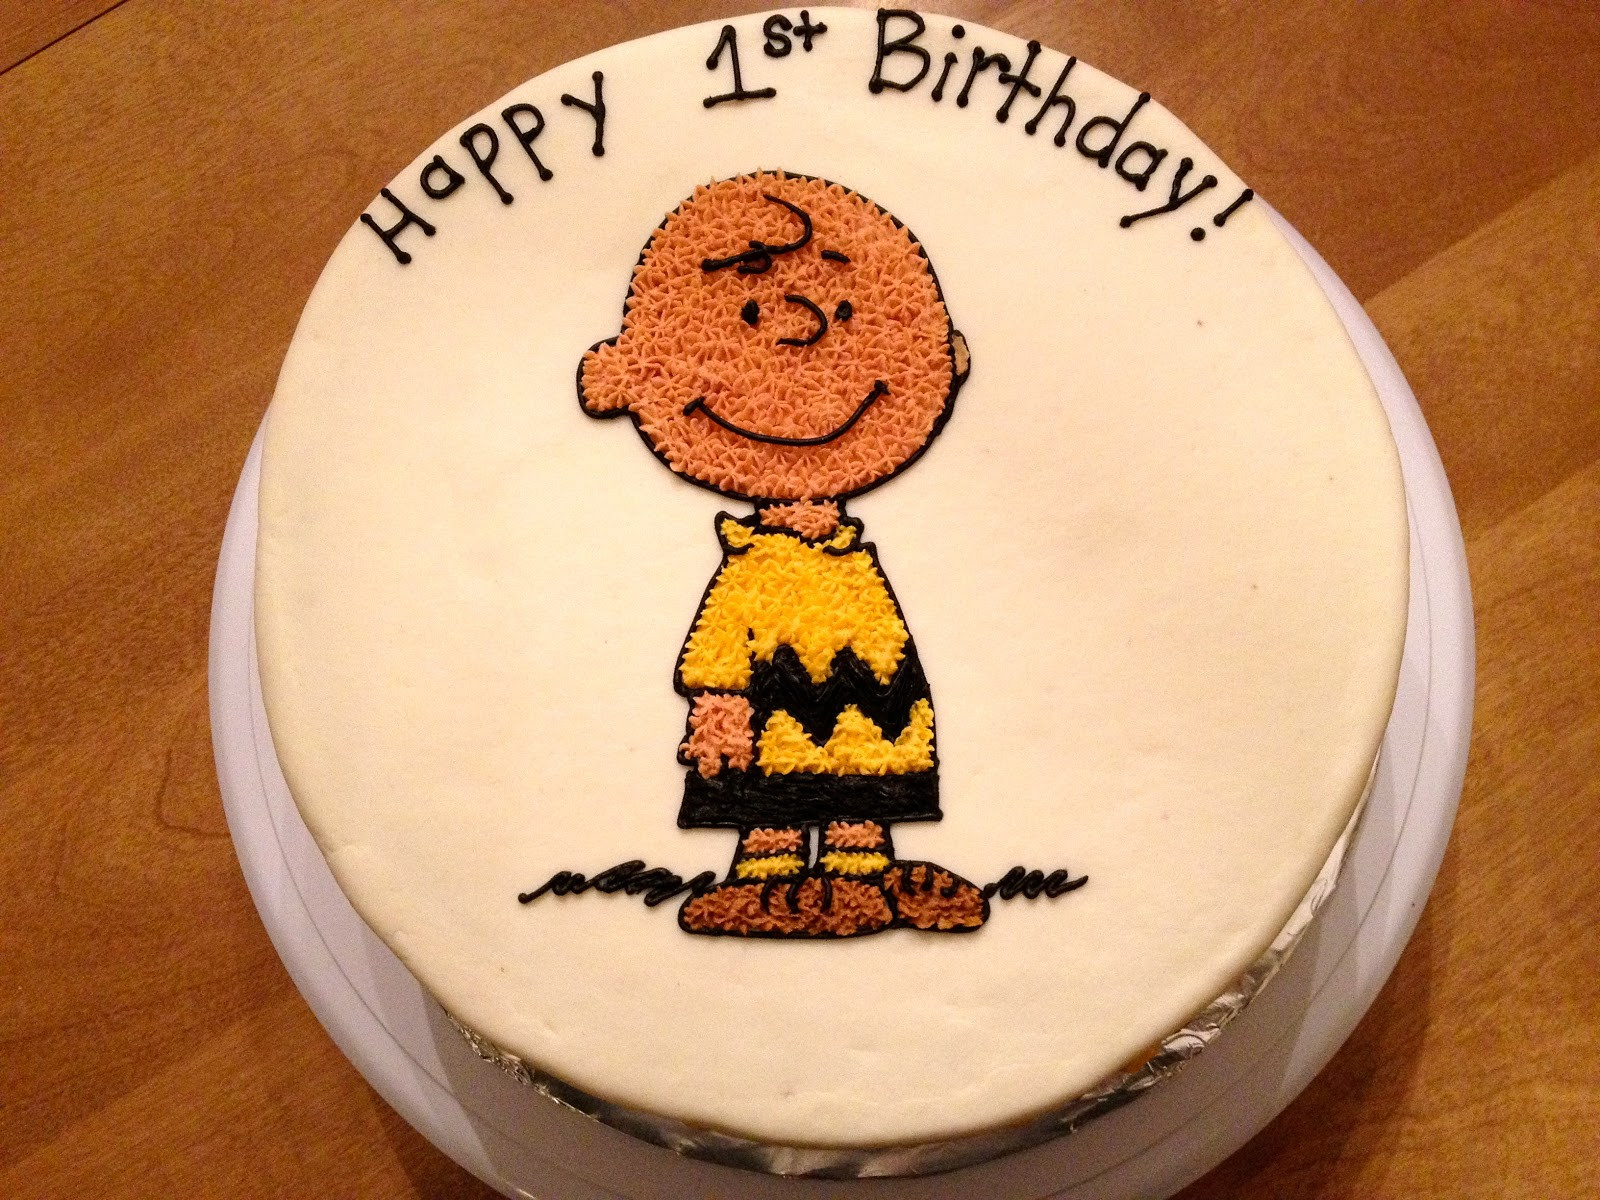 Charlie Brown Birthday Cake
 Toute Sweet Charlie Brown cake